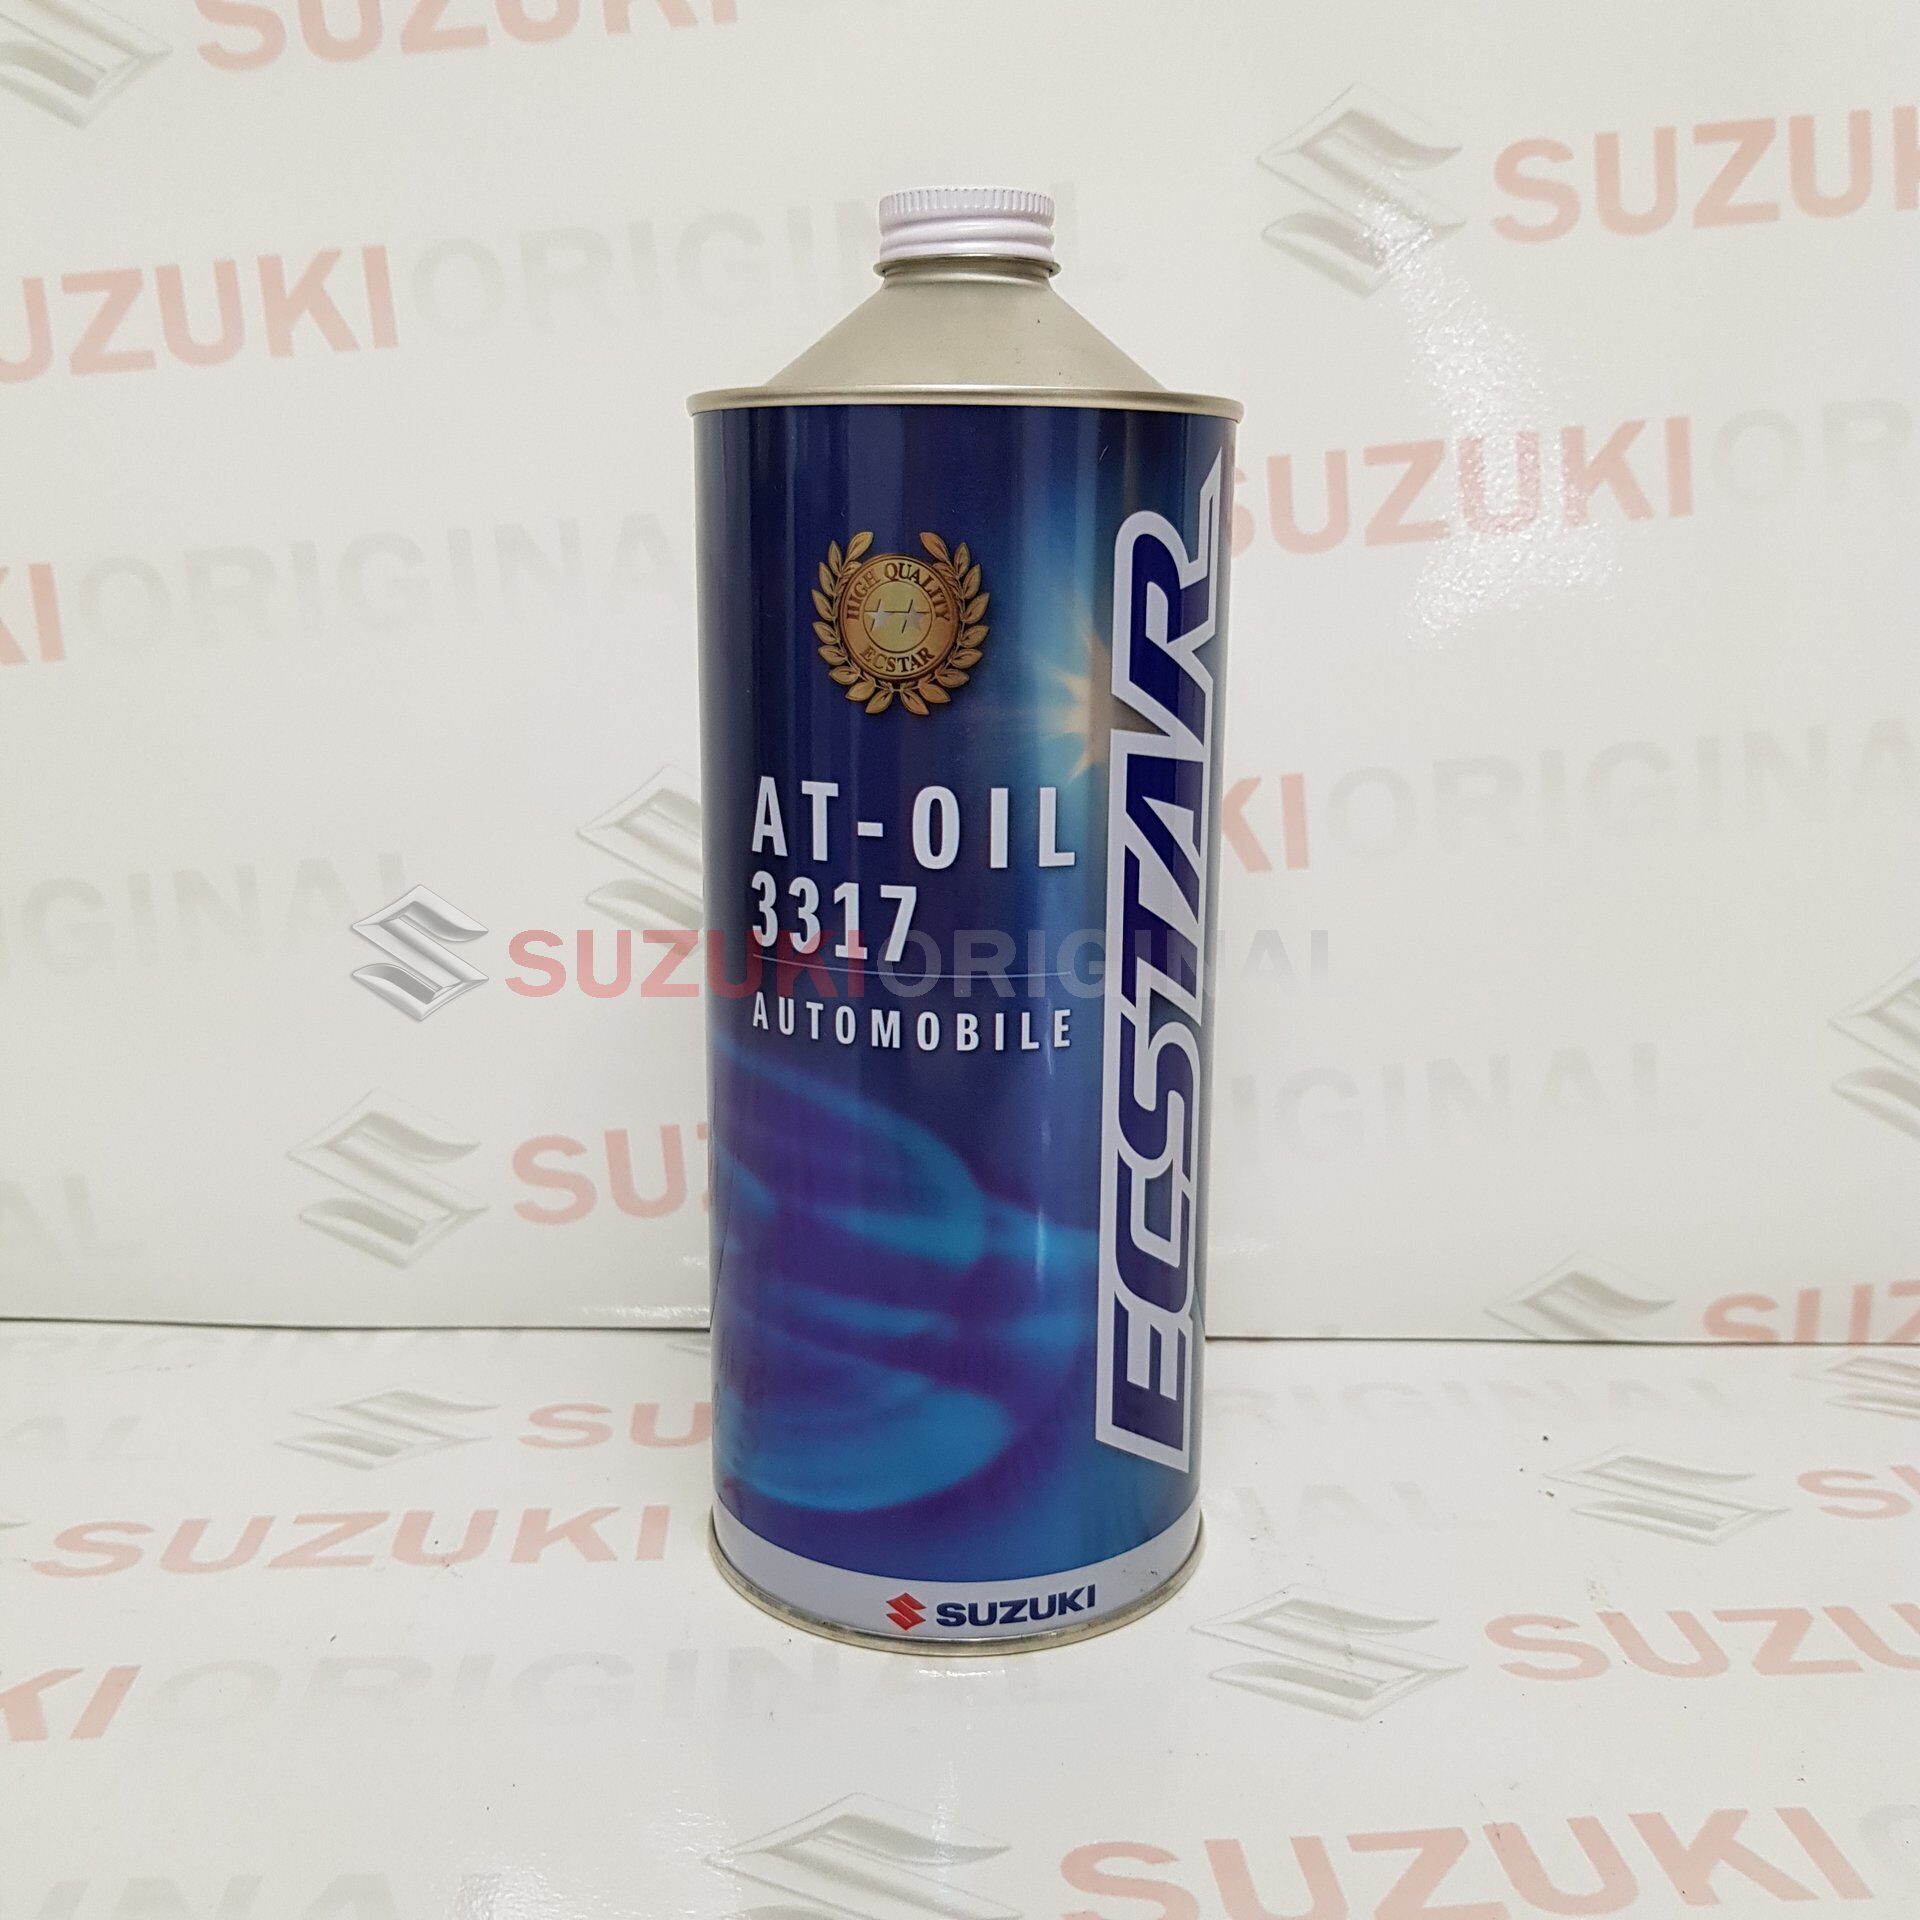 Suzuki atf. Suzuki ATF 3317. ATF 3317 Suzuki аналоги. Масло Судзуки 3317. Оригинальное Suzuki ATF 3317.